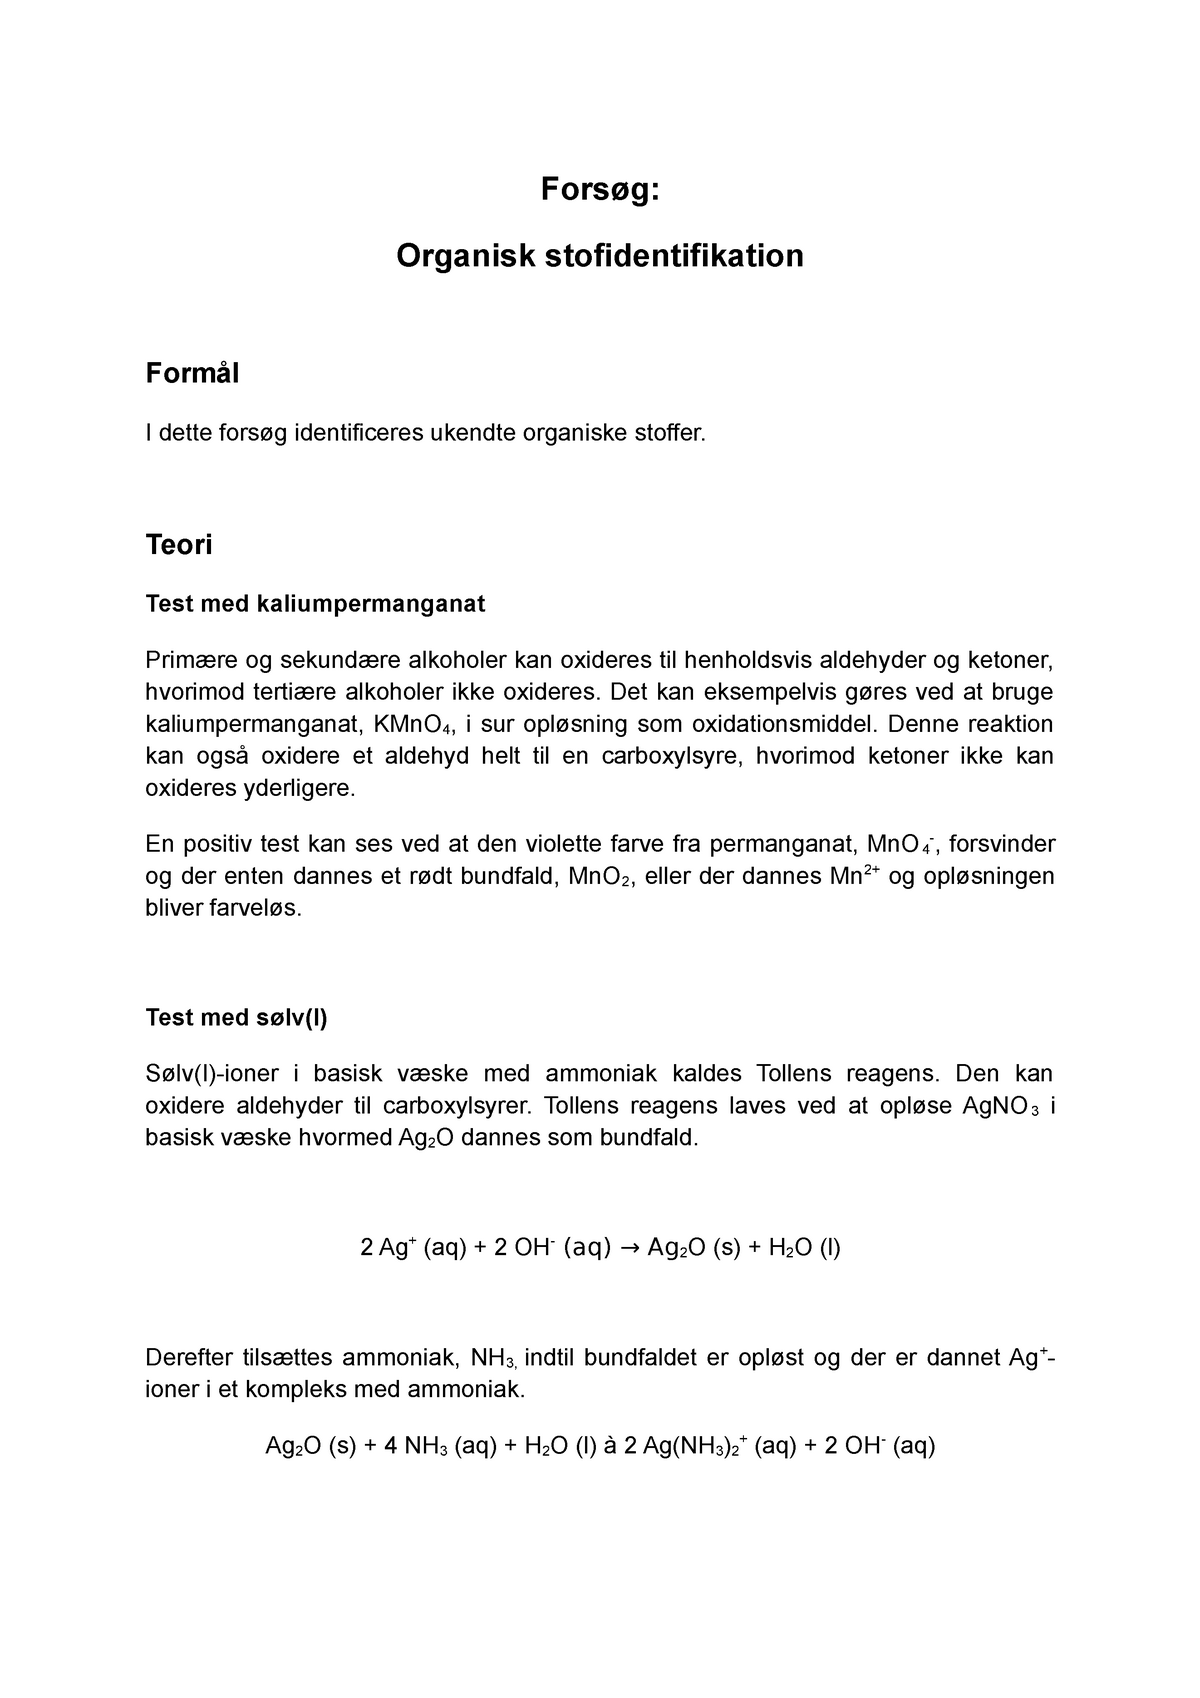 Rapport Organisk stofidentifikation 26471 - StuDocu